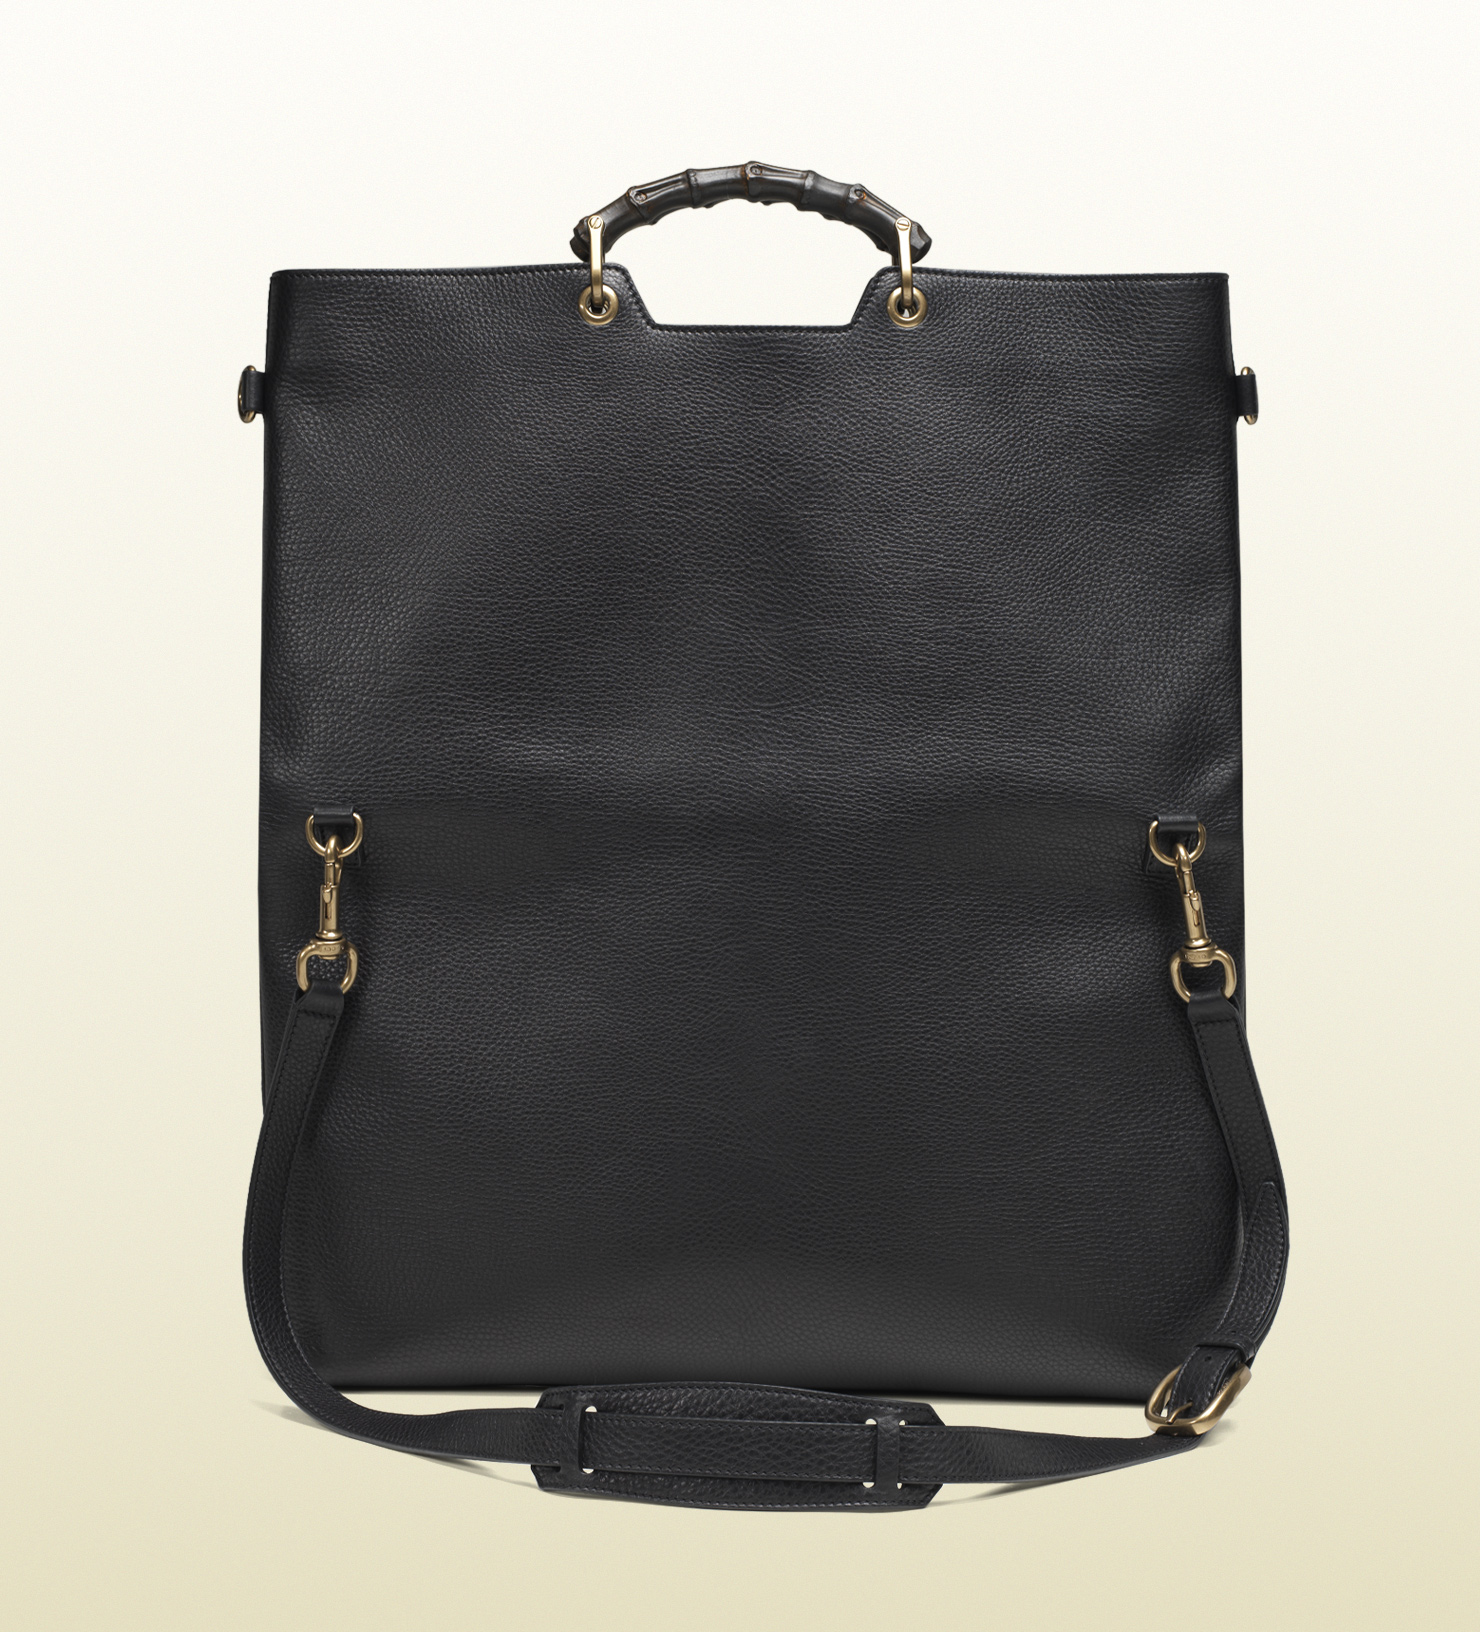 Gucci Black Leather Foldable Messenger Bag in Black - Lyst